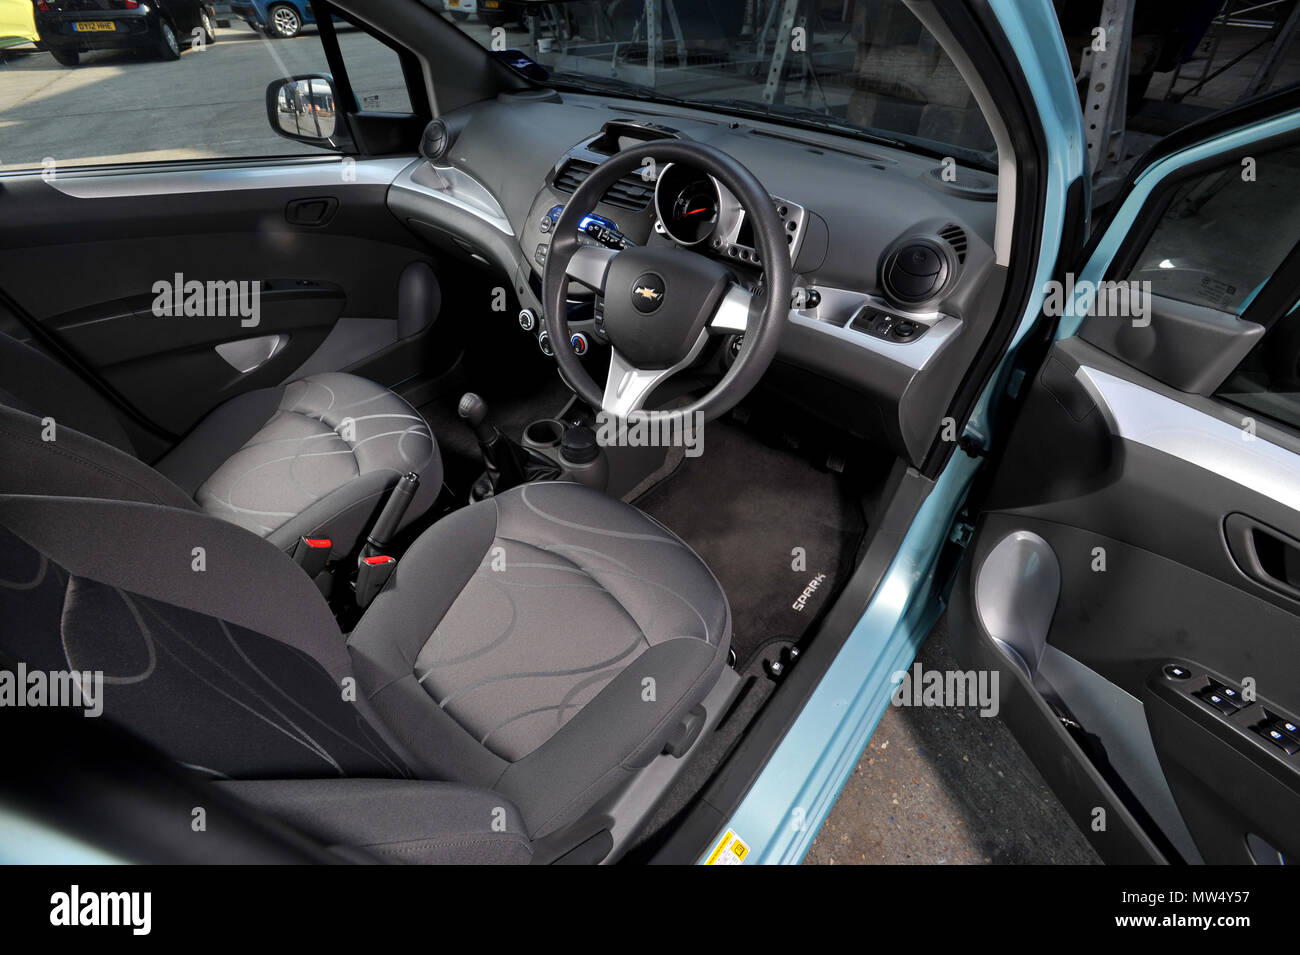 2012 Chevrolet Spark compact city car Stock Photo